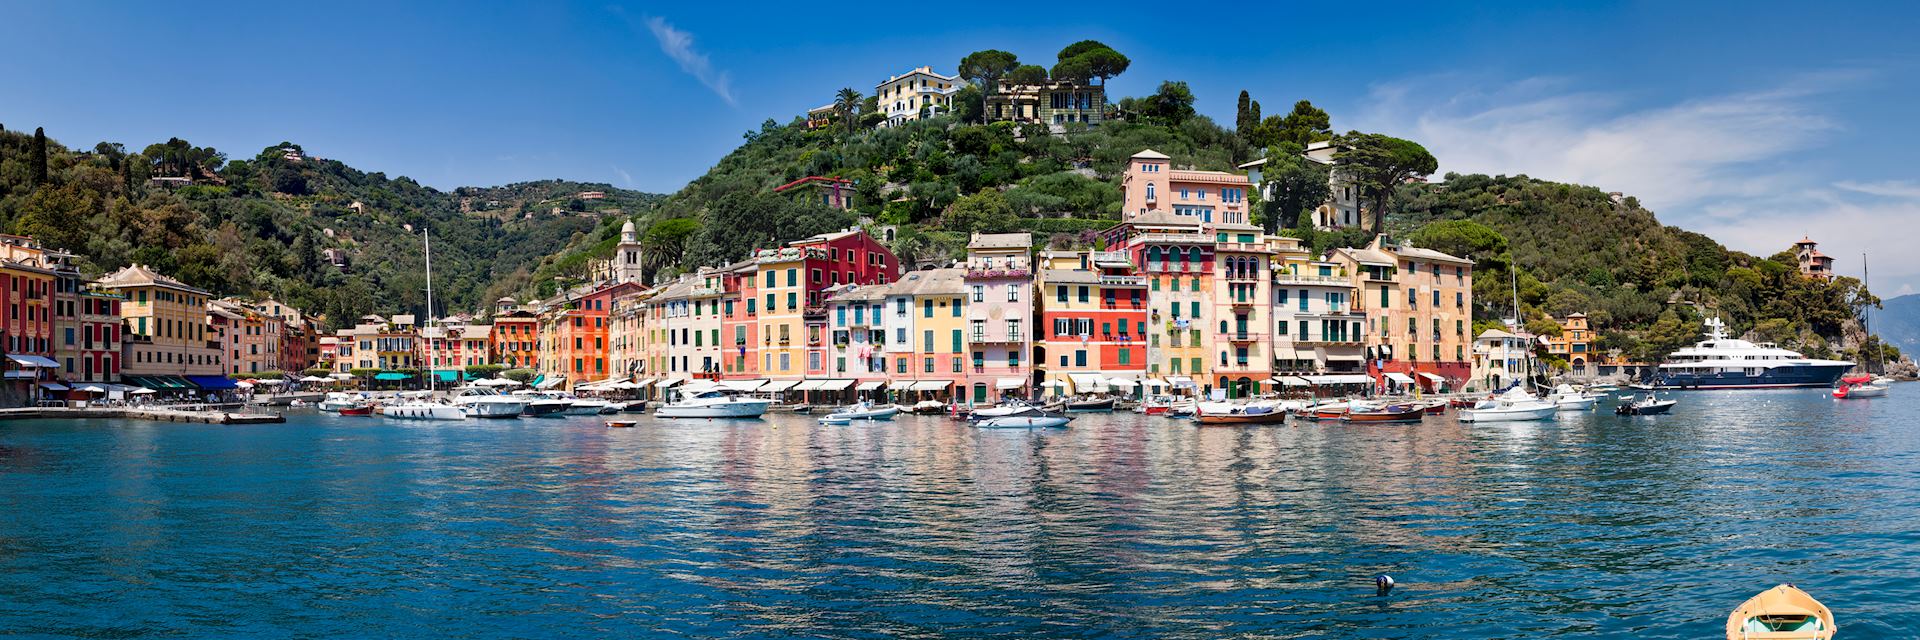 Visit Portofino Santa Margherita Tailor Made Vacations